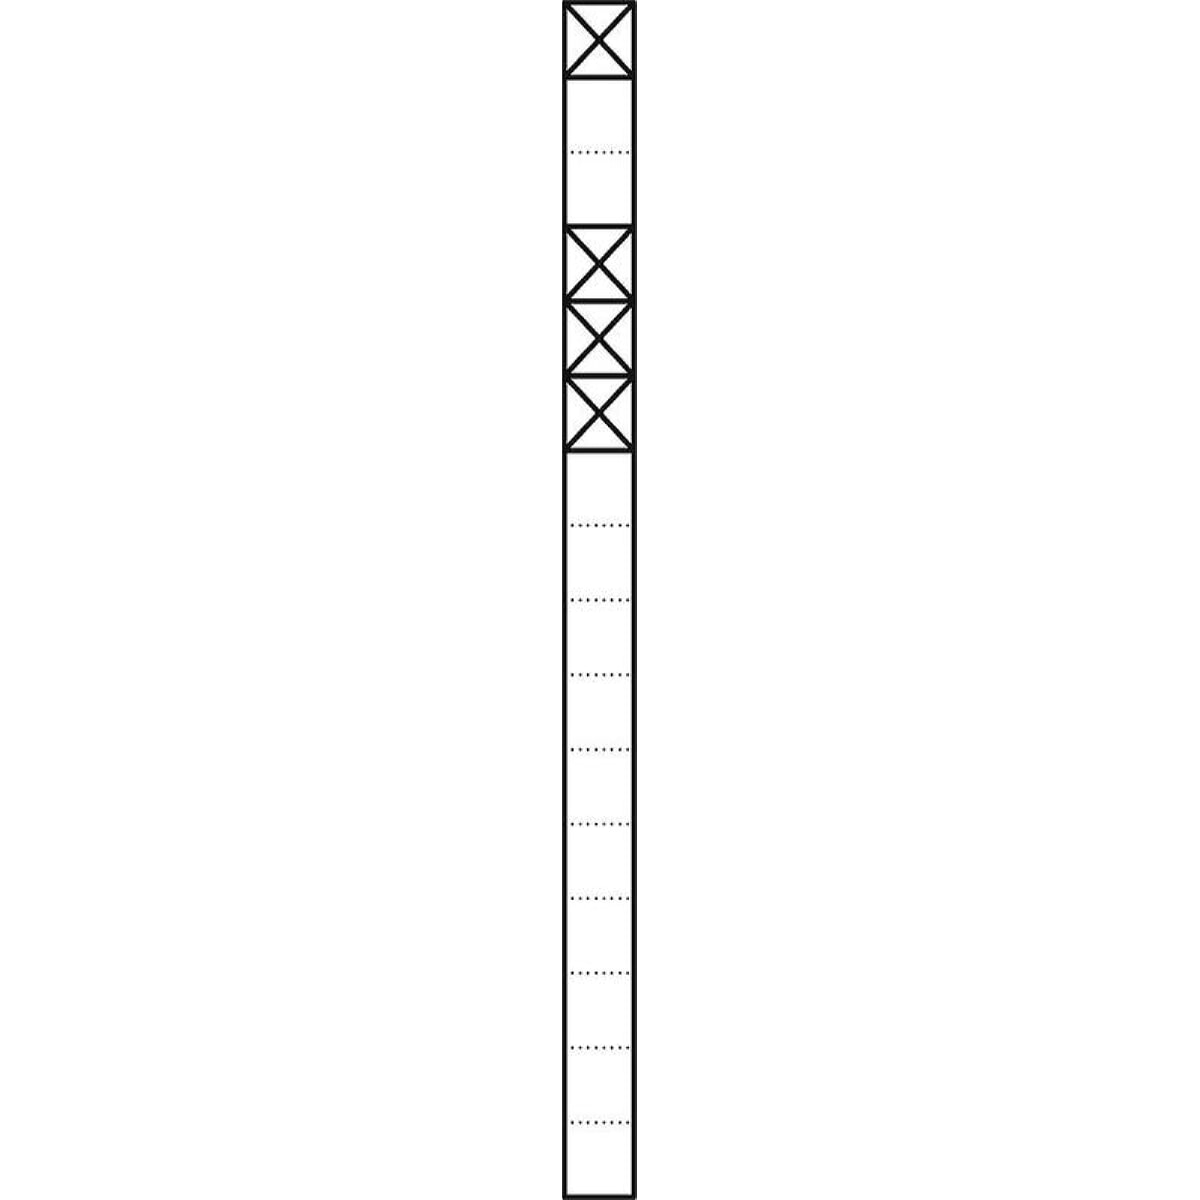 Siedle Kommunikations-Stele KSF 616-1/3 DG dunkelgrau-glimmer freist 200039591-00